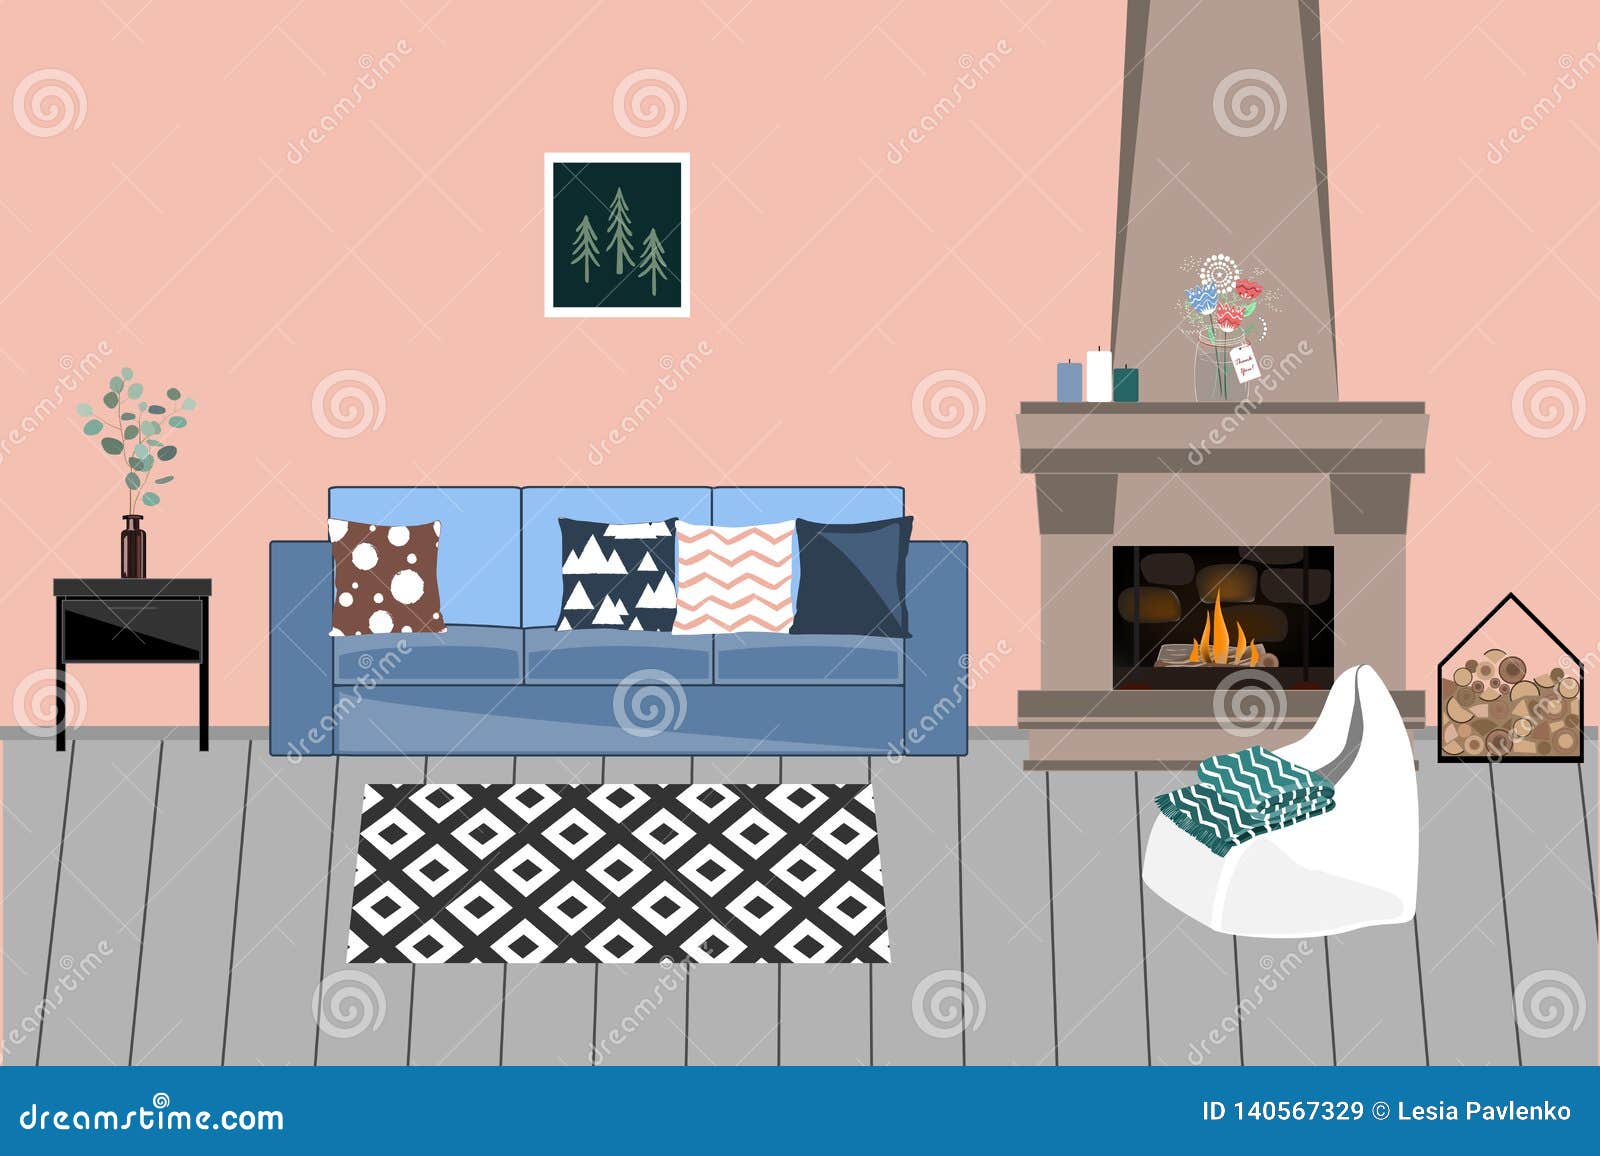 Vector Interior In Scandinavian Style Living Room With